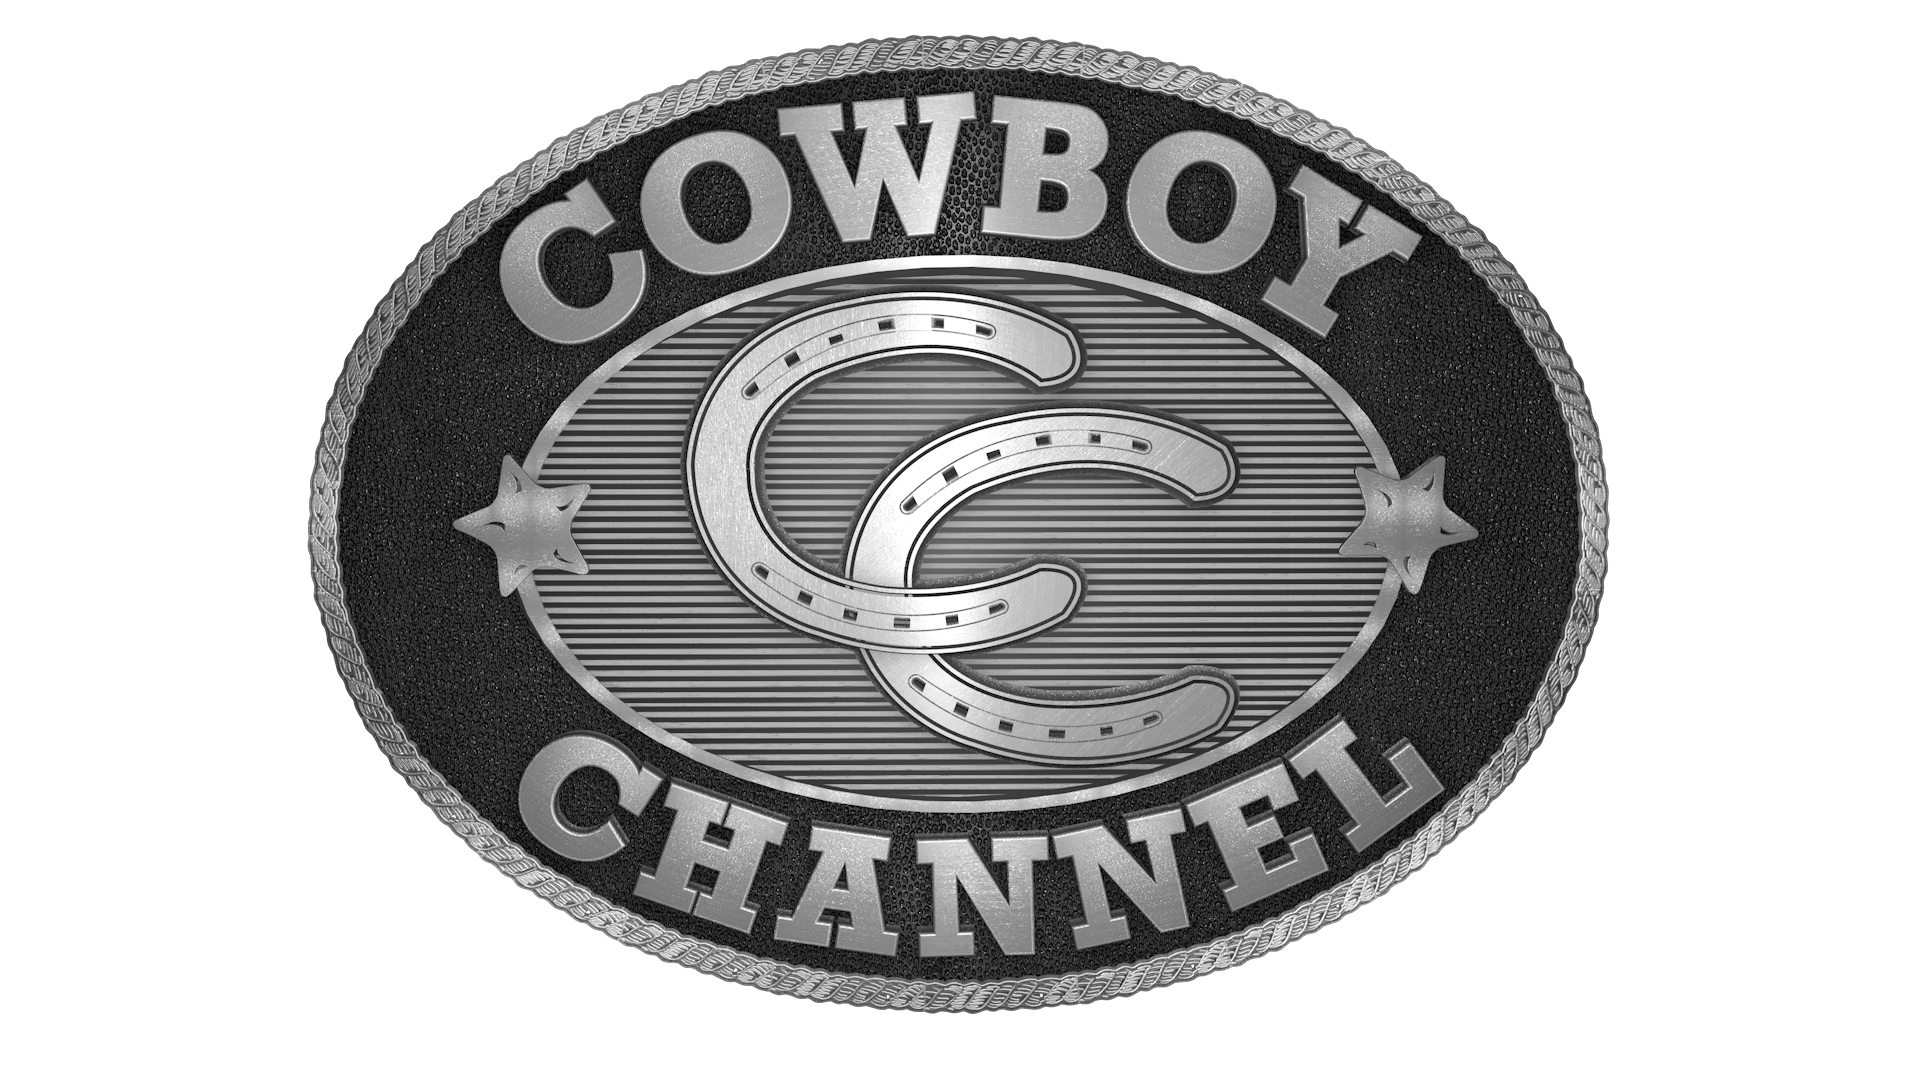 The Cowboy Channel Logo.